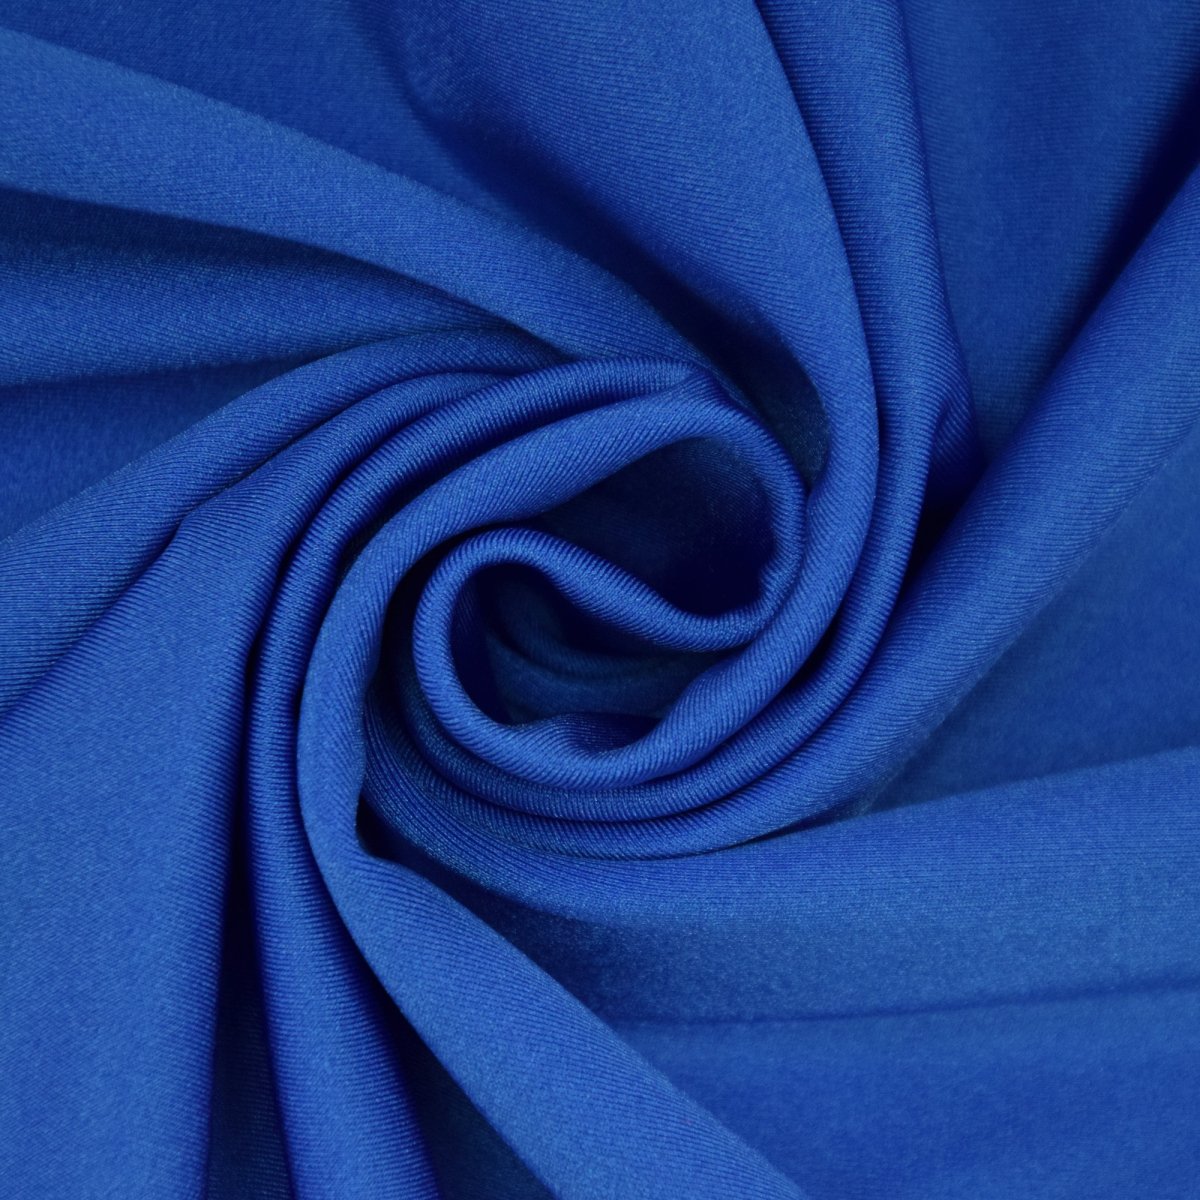 Swimsuit fabric blue 2